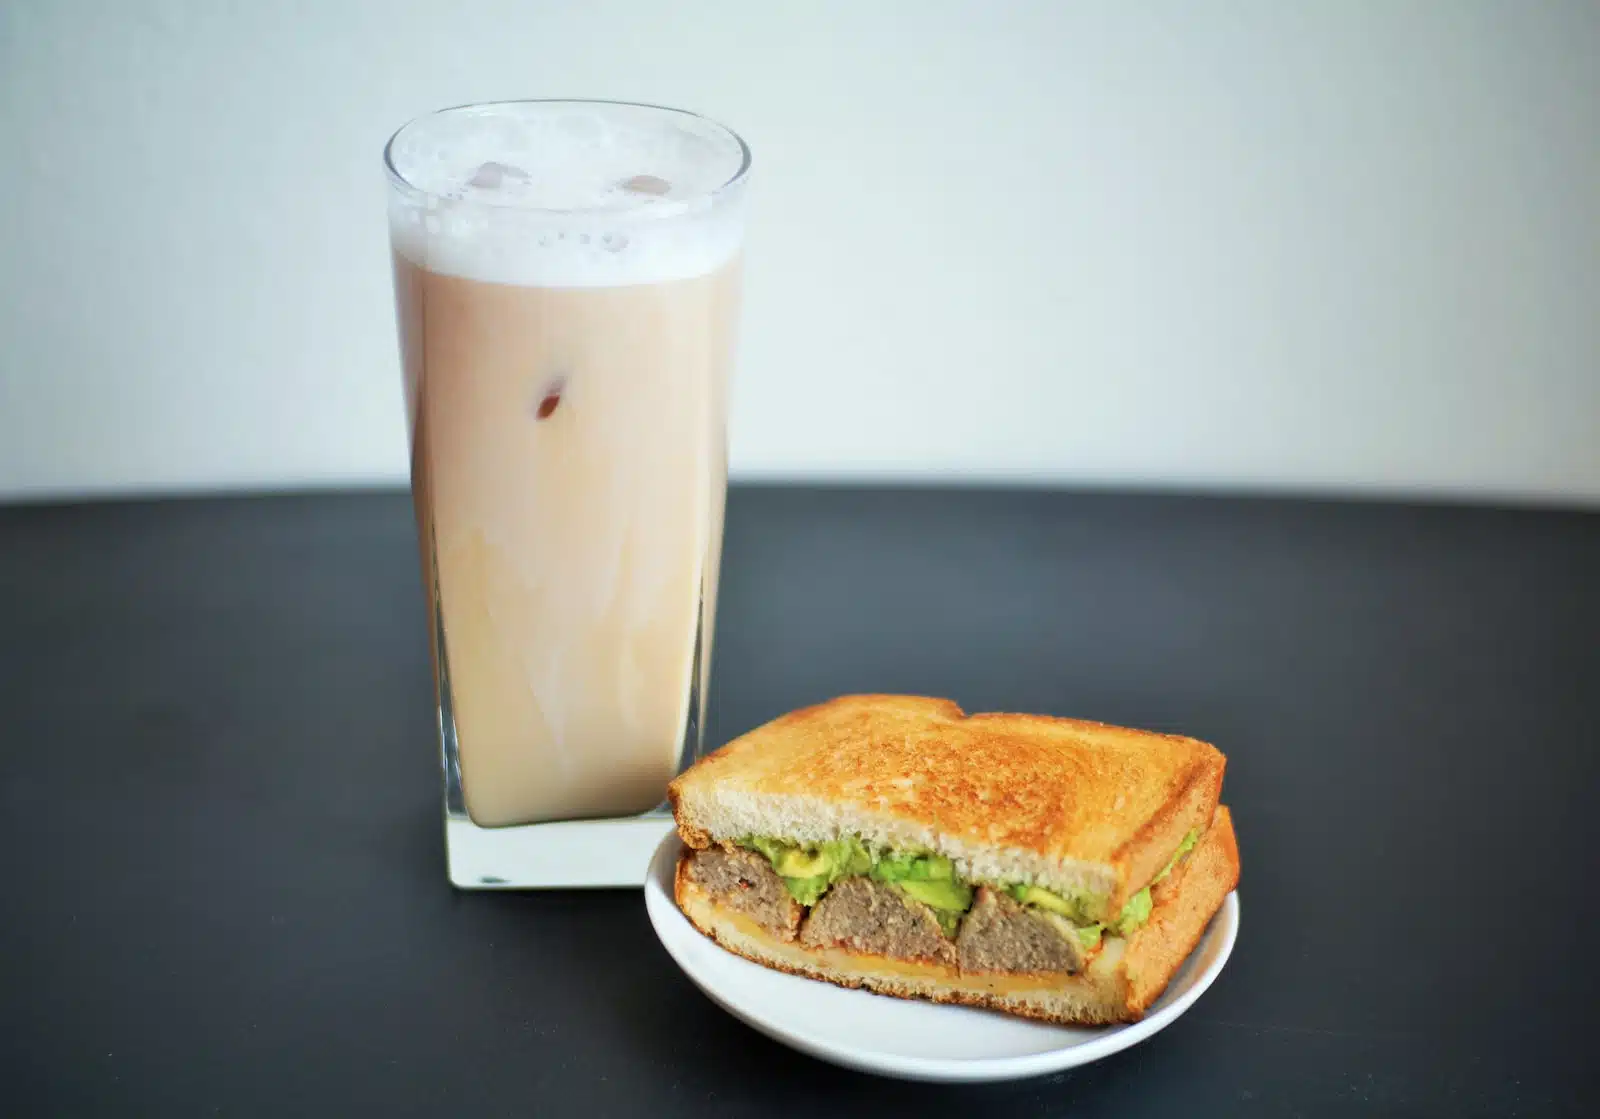 filled drinking glass beside a sliced sandwich